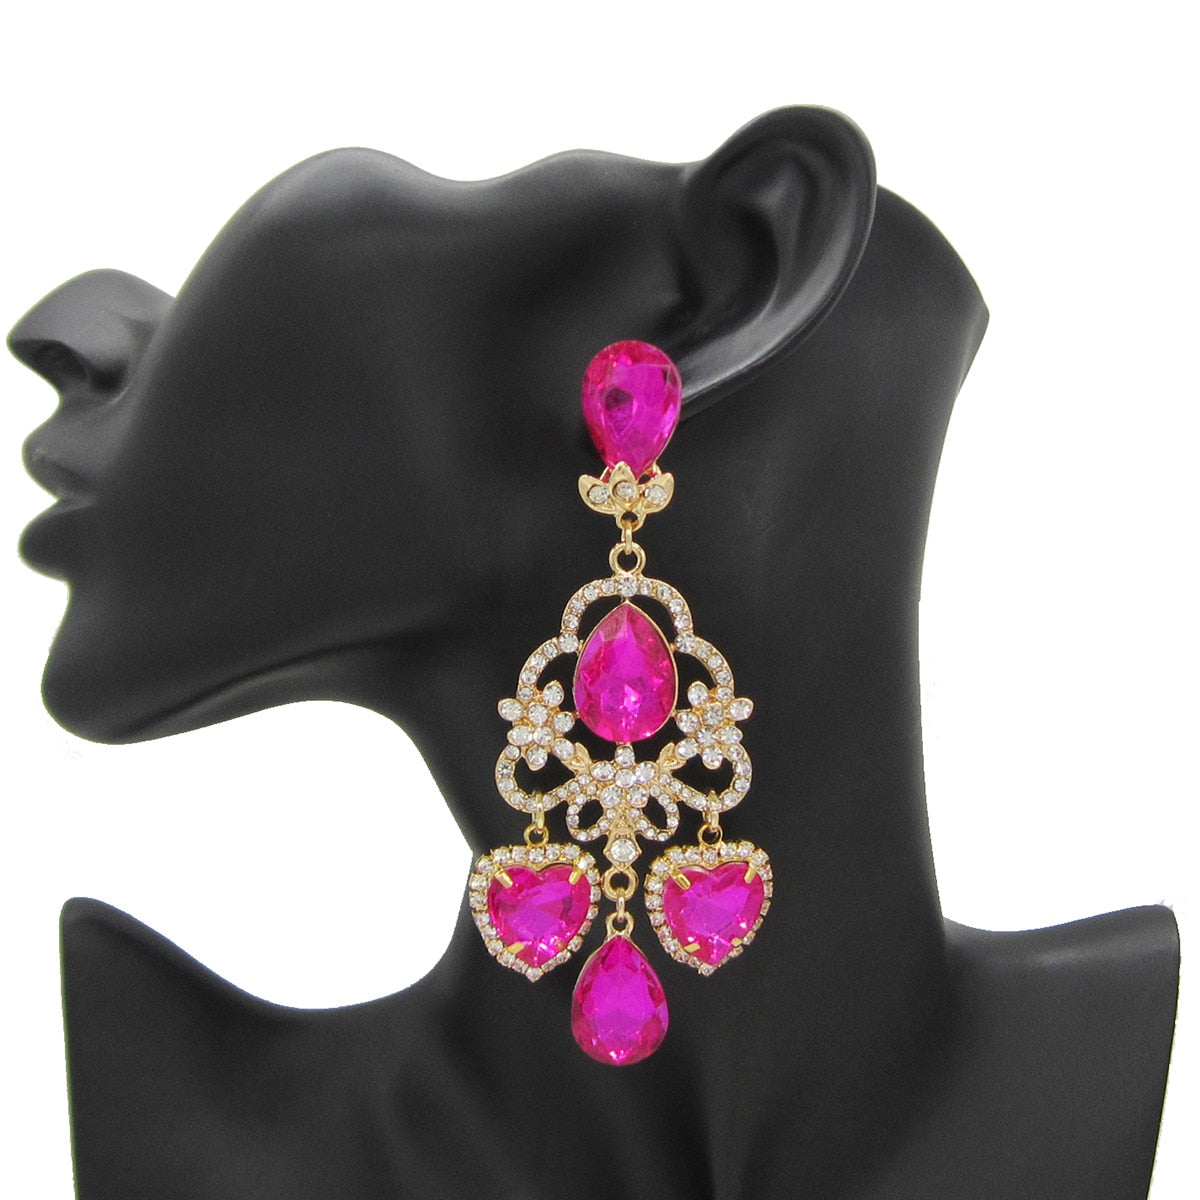 Fashion Crystal Dangle Drop Big Earrings with High Quality Rhinestone for Women